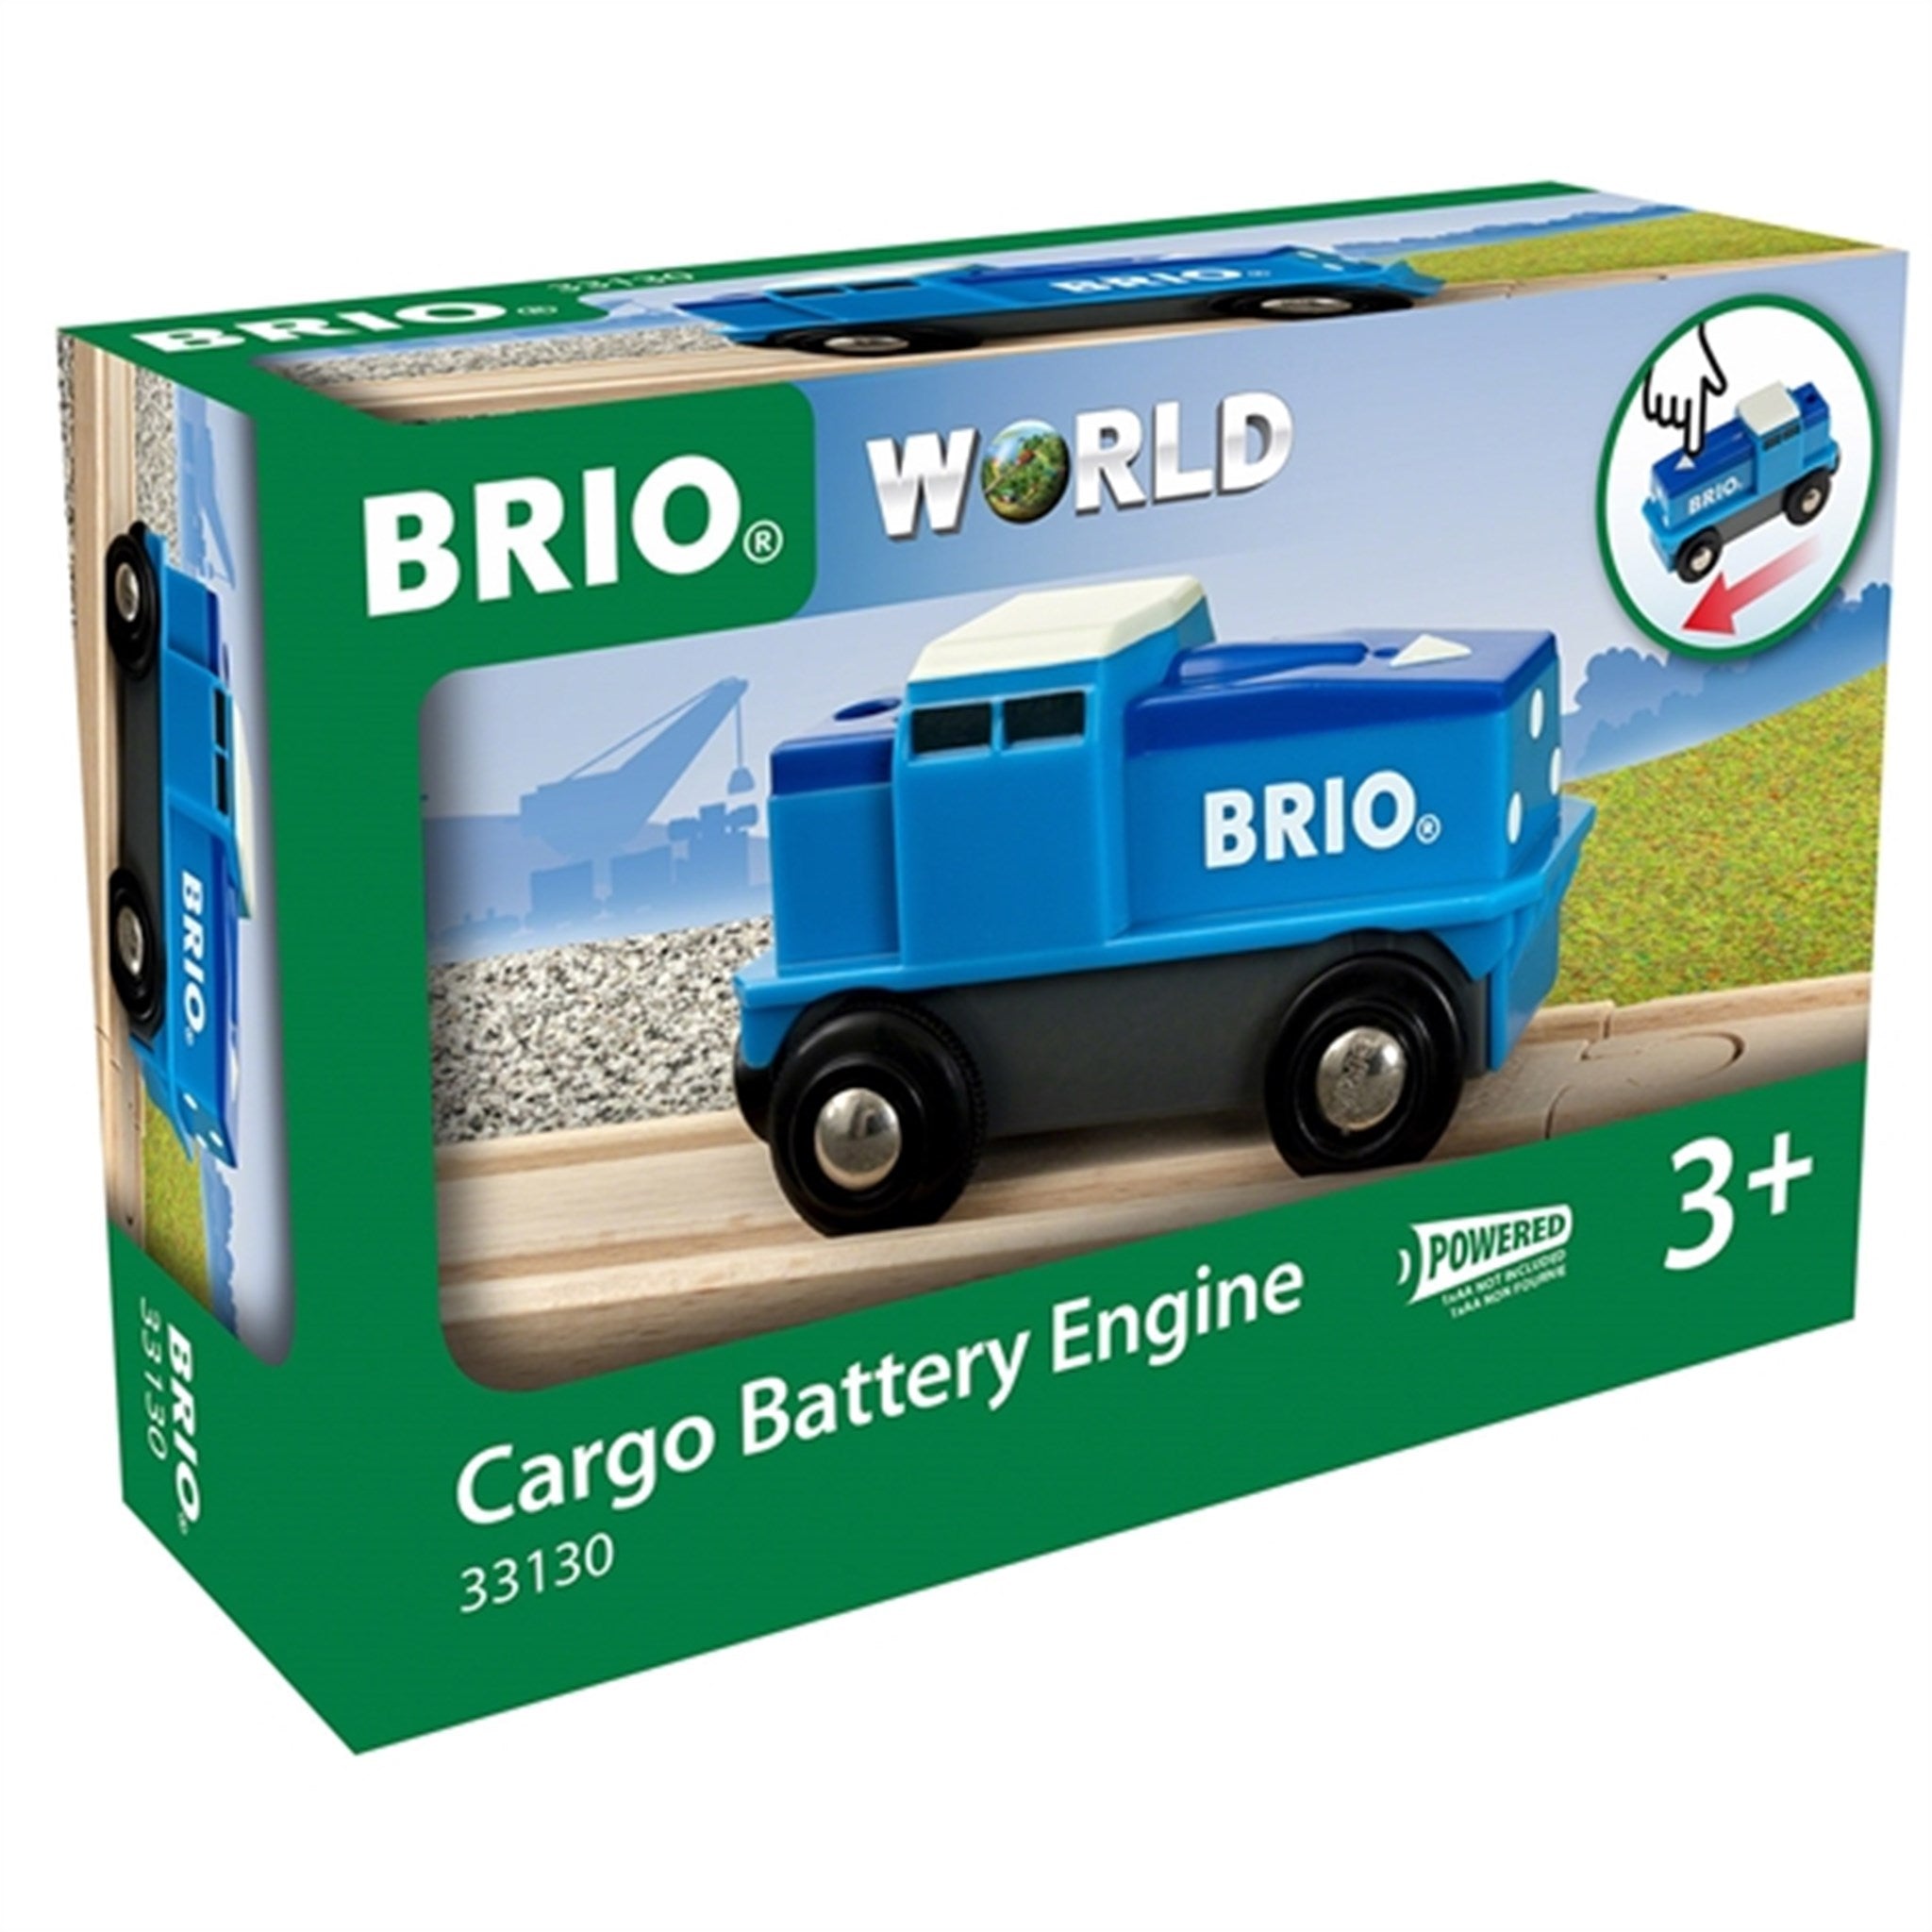 BRIO® Cargo Battery Engine 2